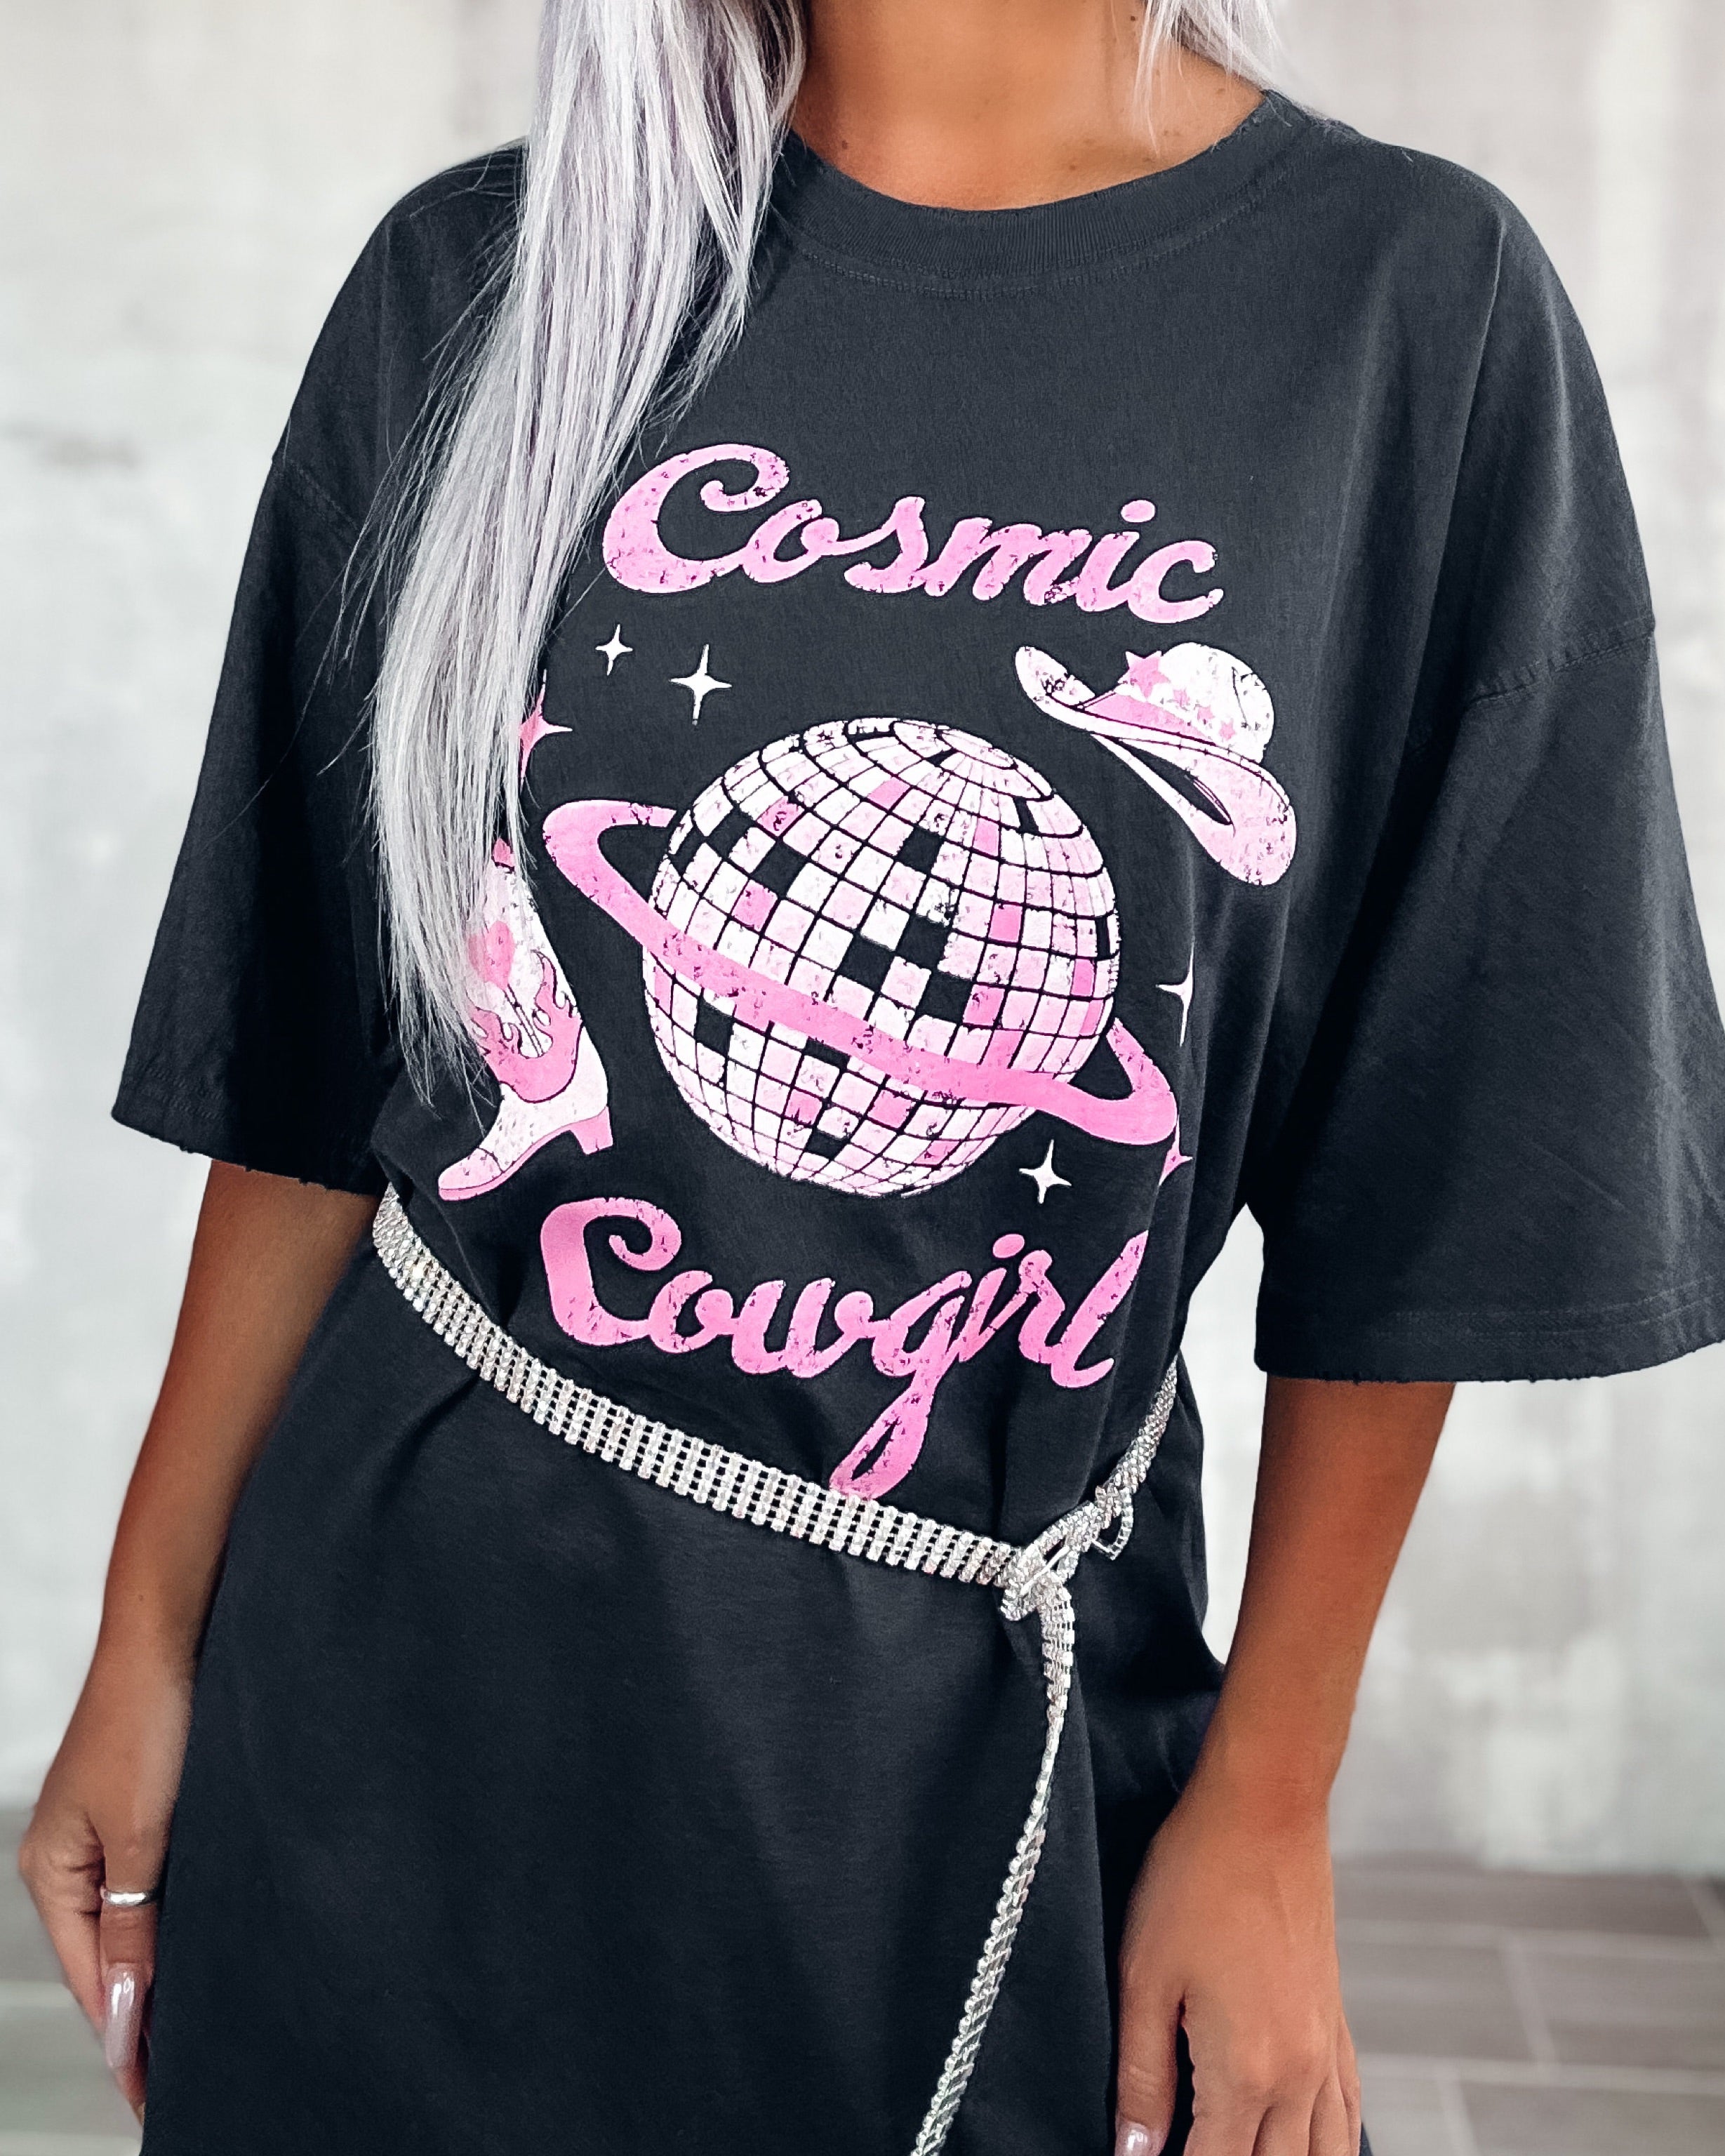 Cosmic Cowgirl Graphic Oversized Tee - Black